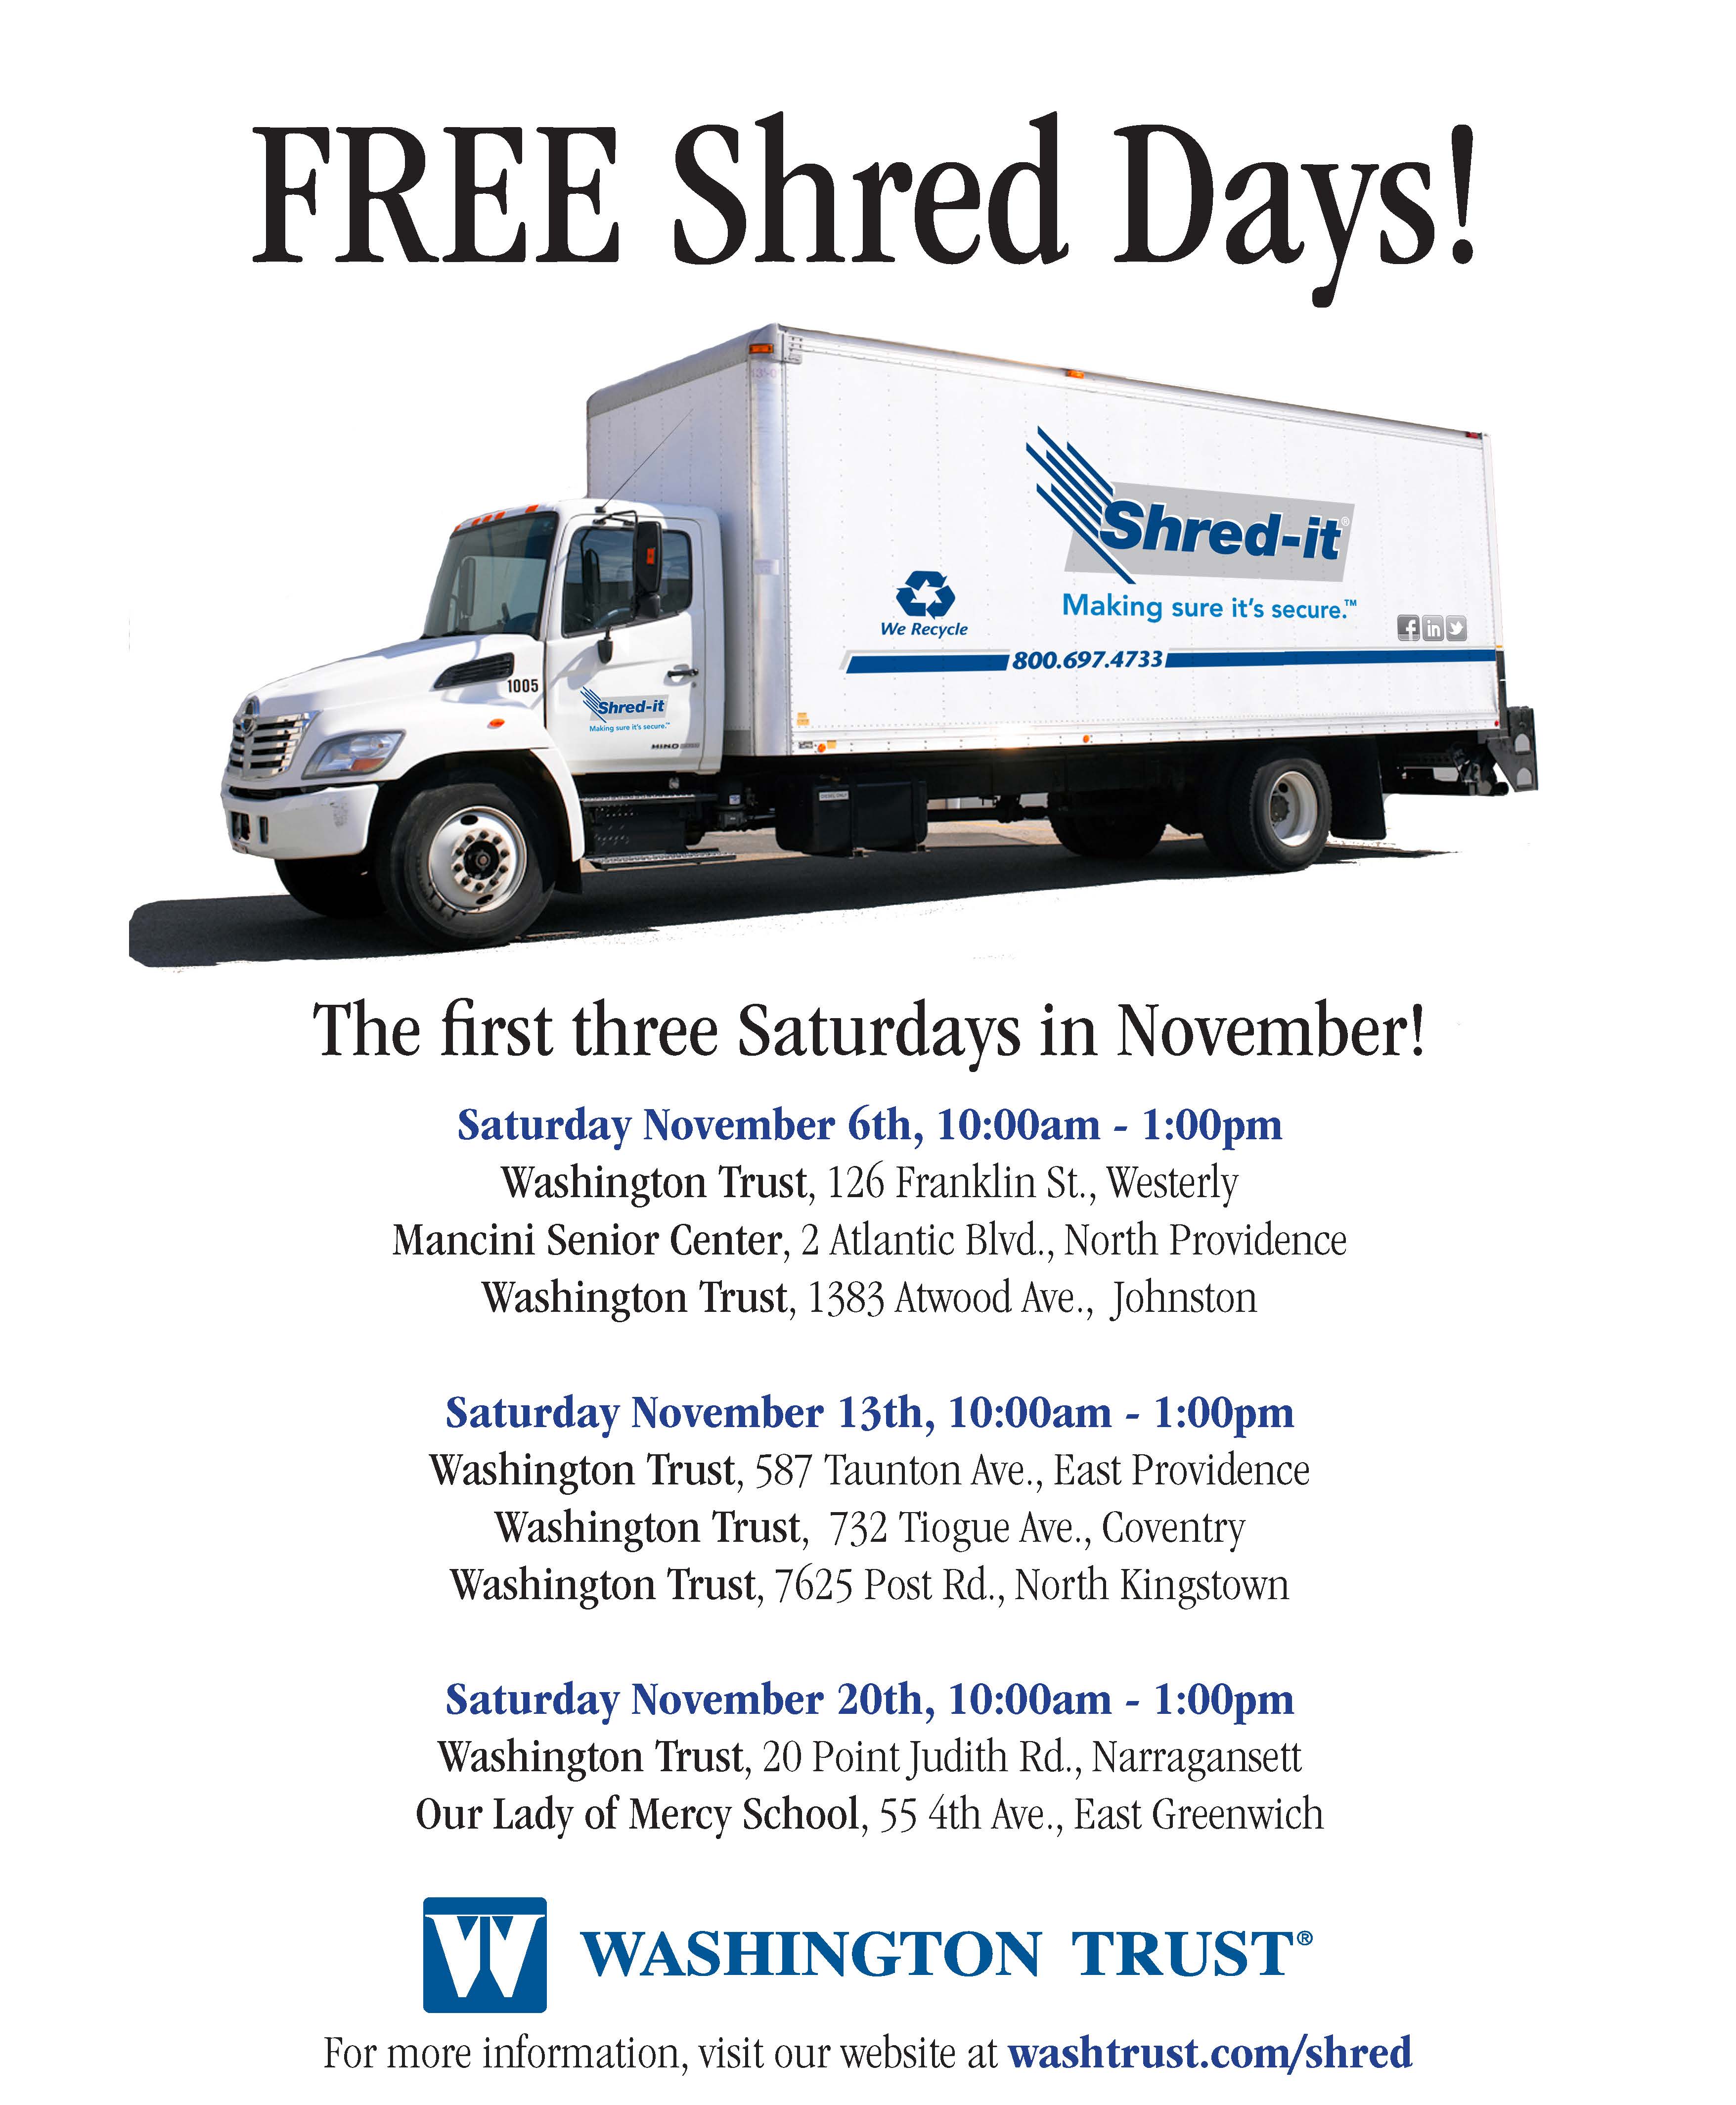 Image for Washington Trust Bank is hosting Free Community Shred Days